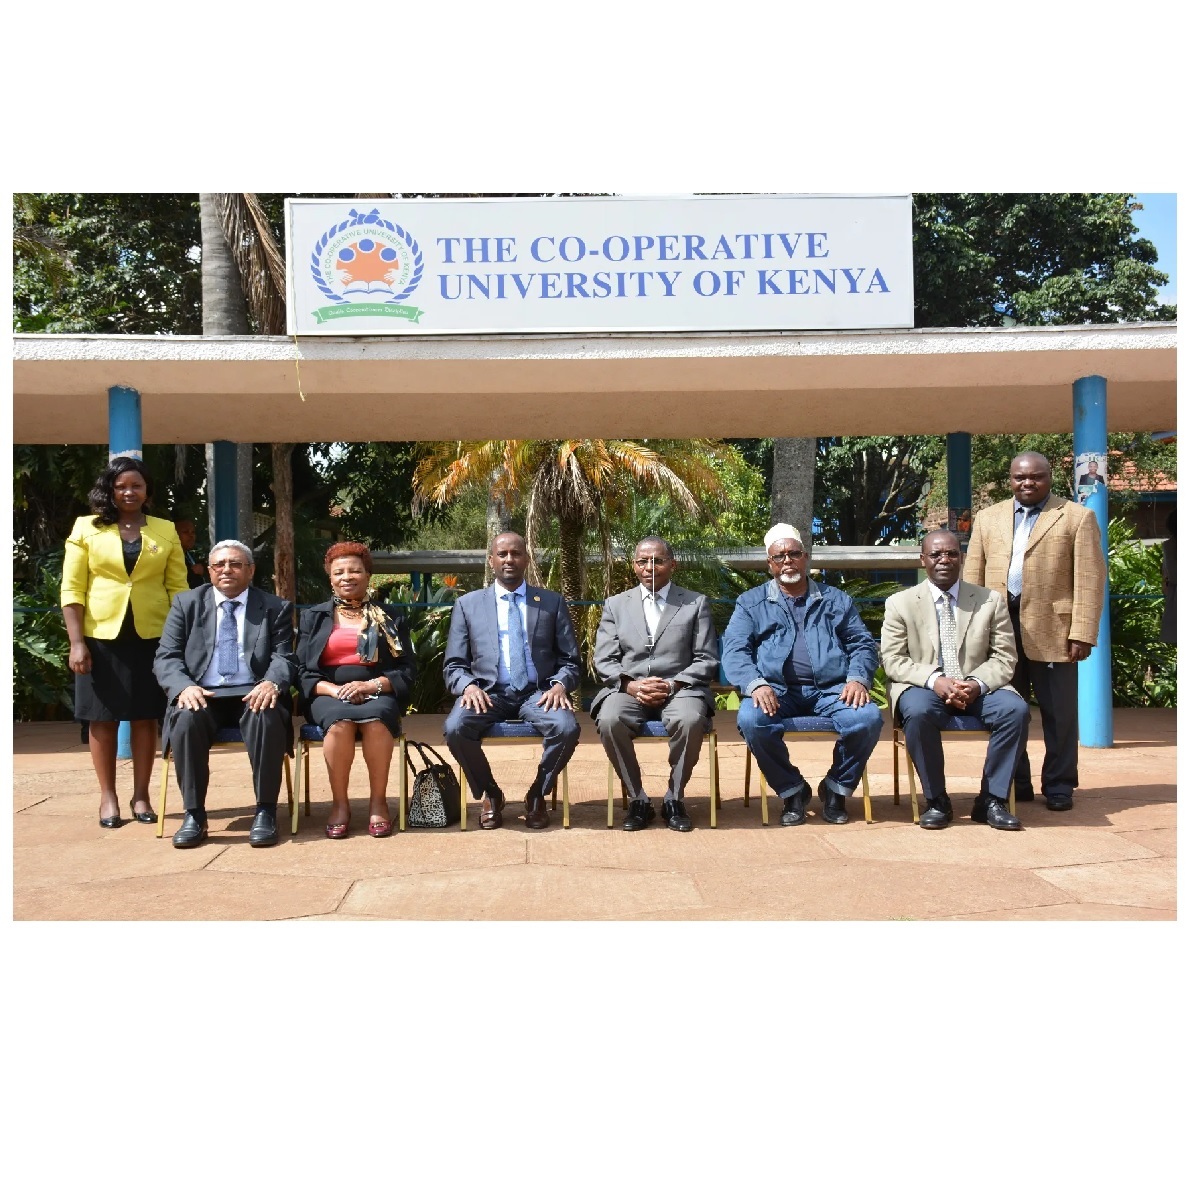 Where is cooperative university of Kenya located?